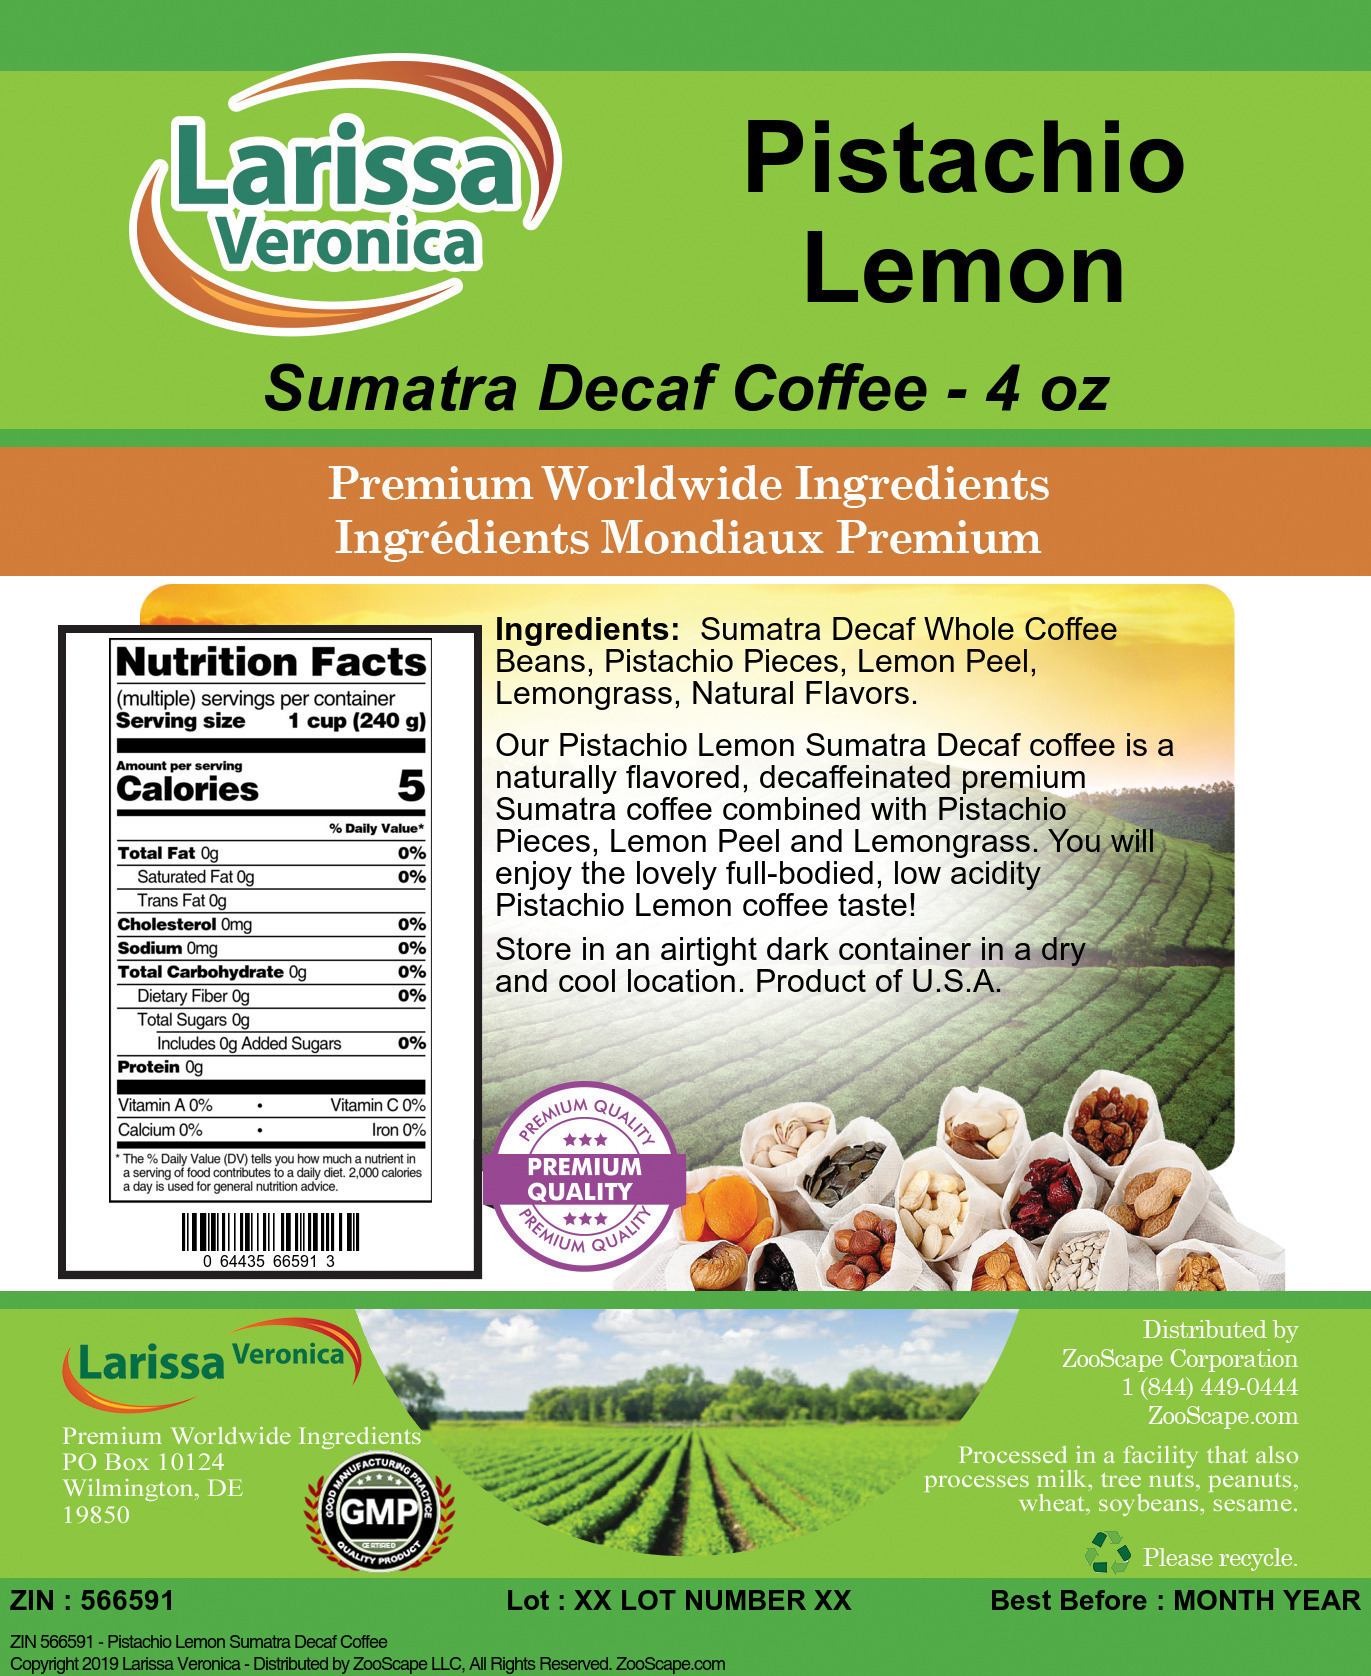 Pistachio Lemon Sumatra Decaf Coffee - Label